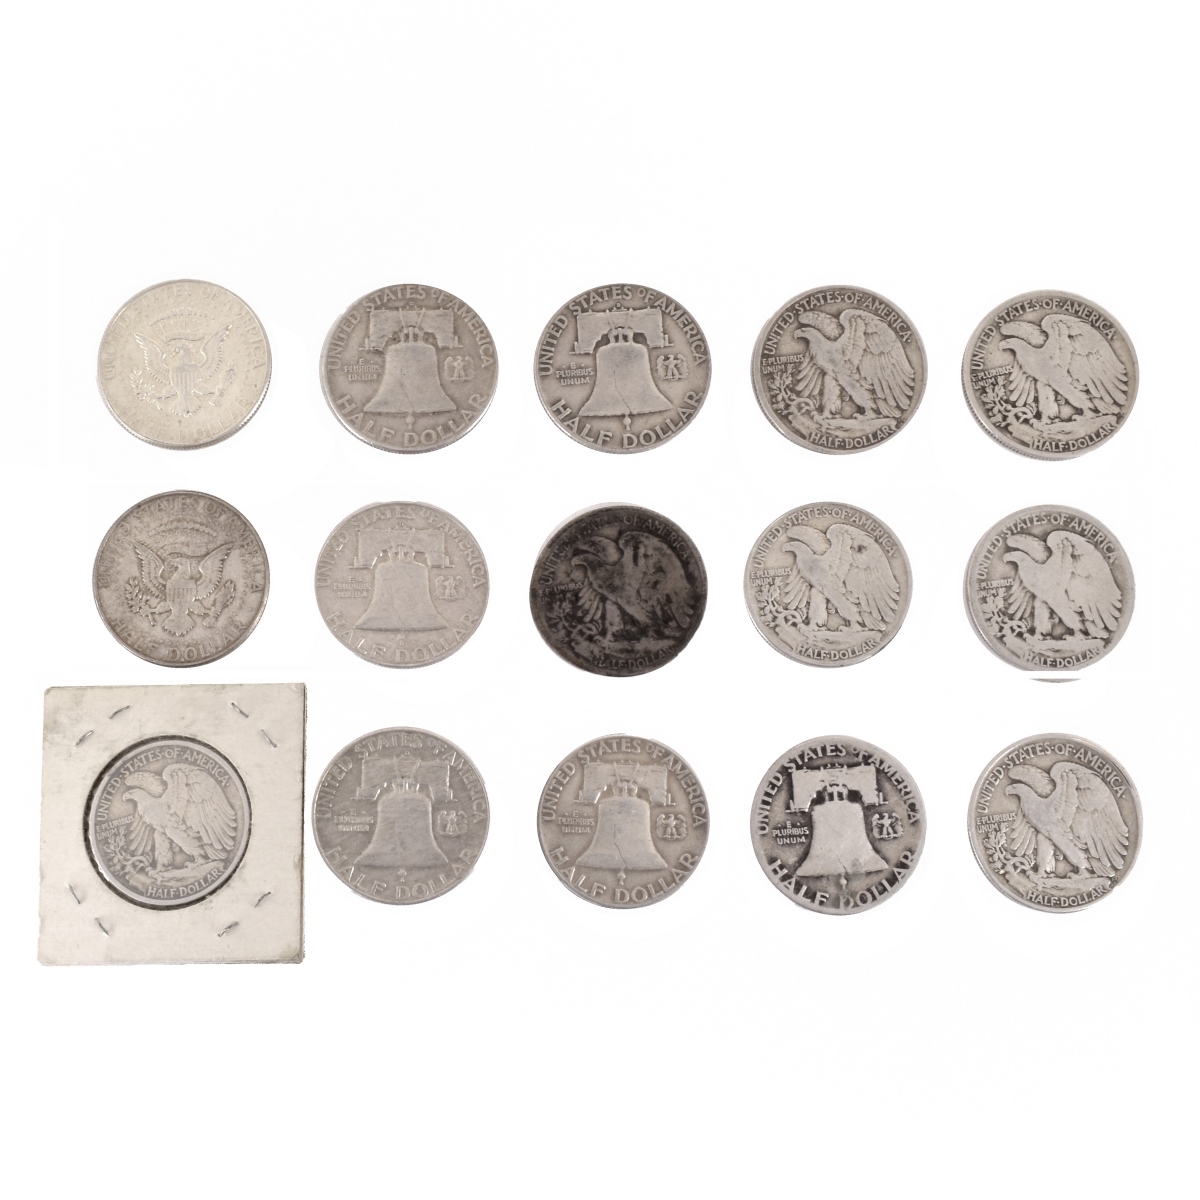 Fifteen US $1/2 Silver Coins